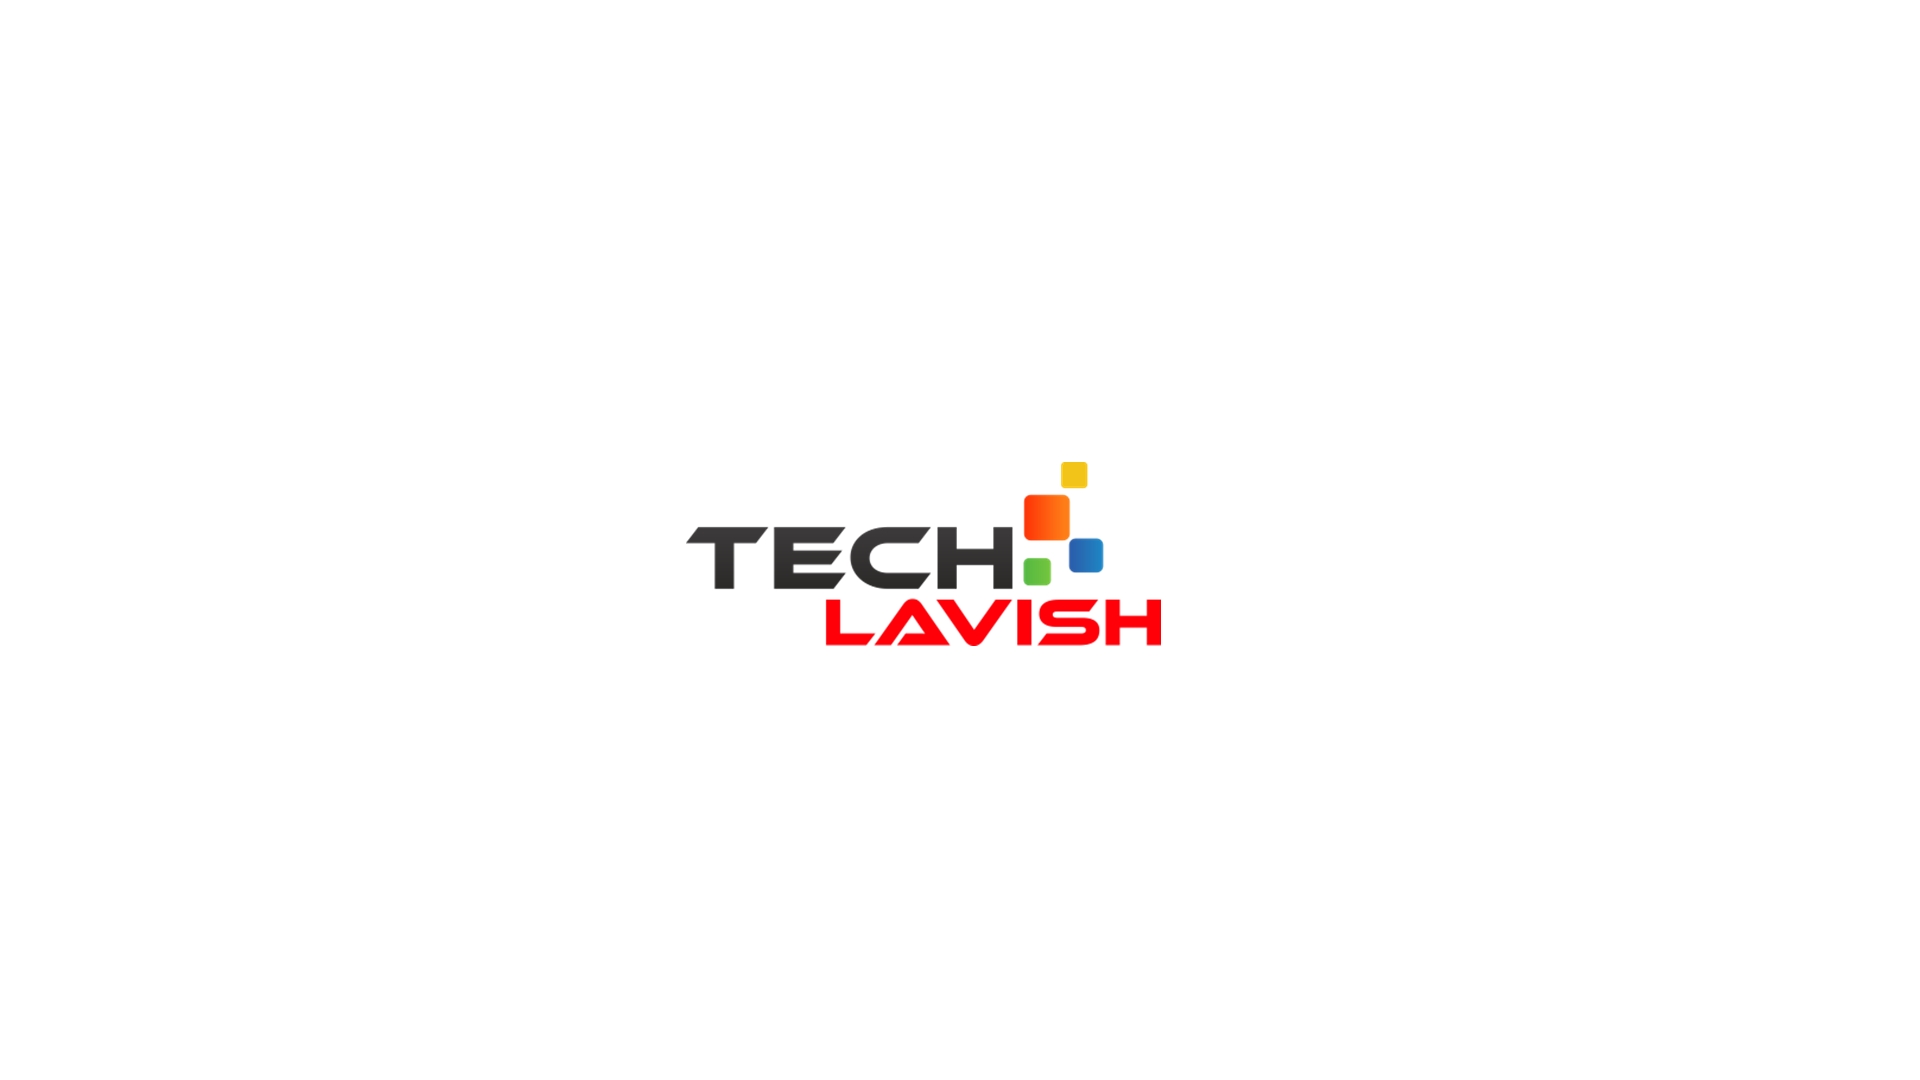 Tech Lavish